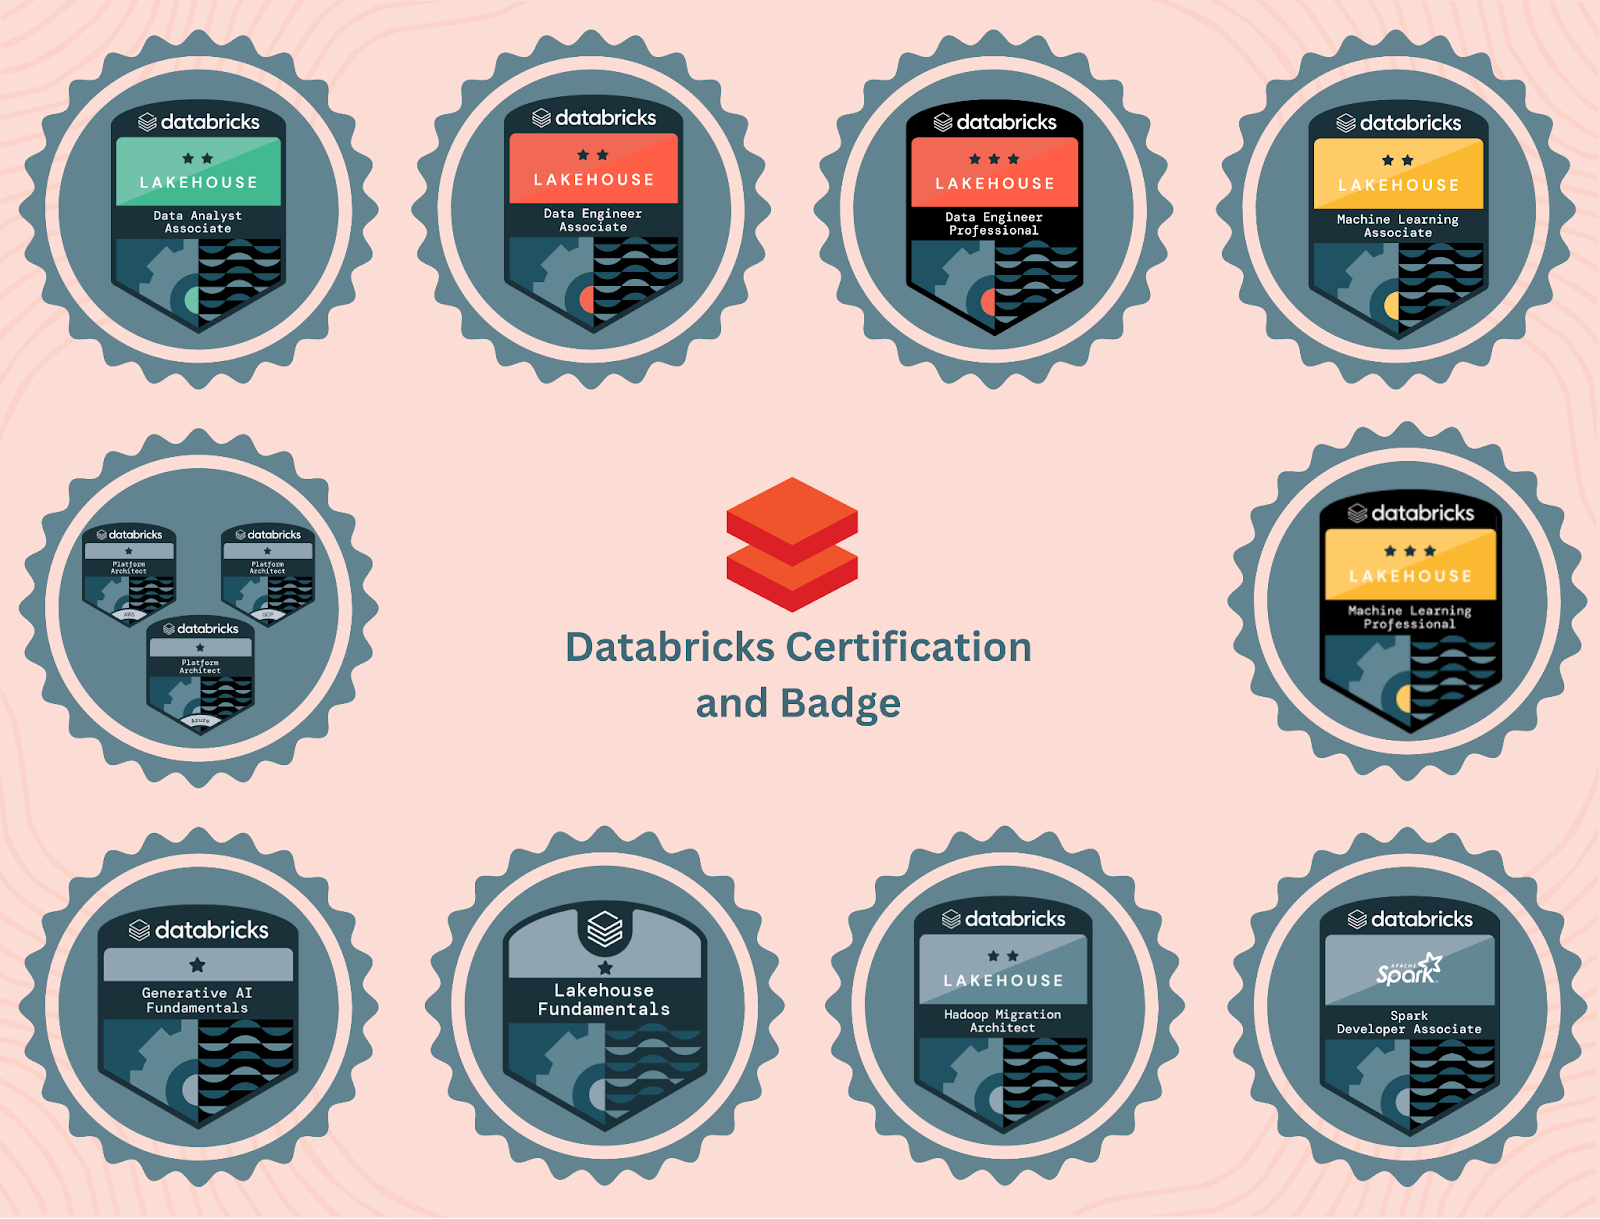 Databricks Certifications List